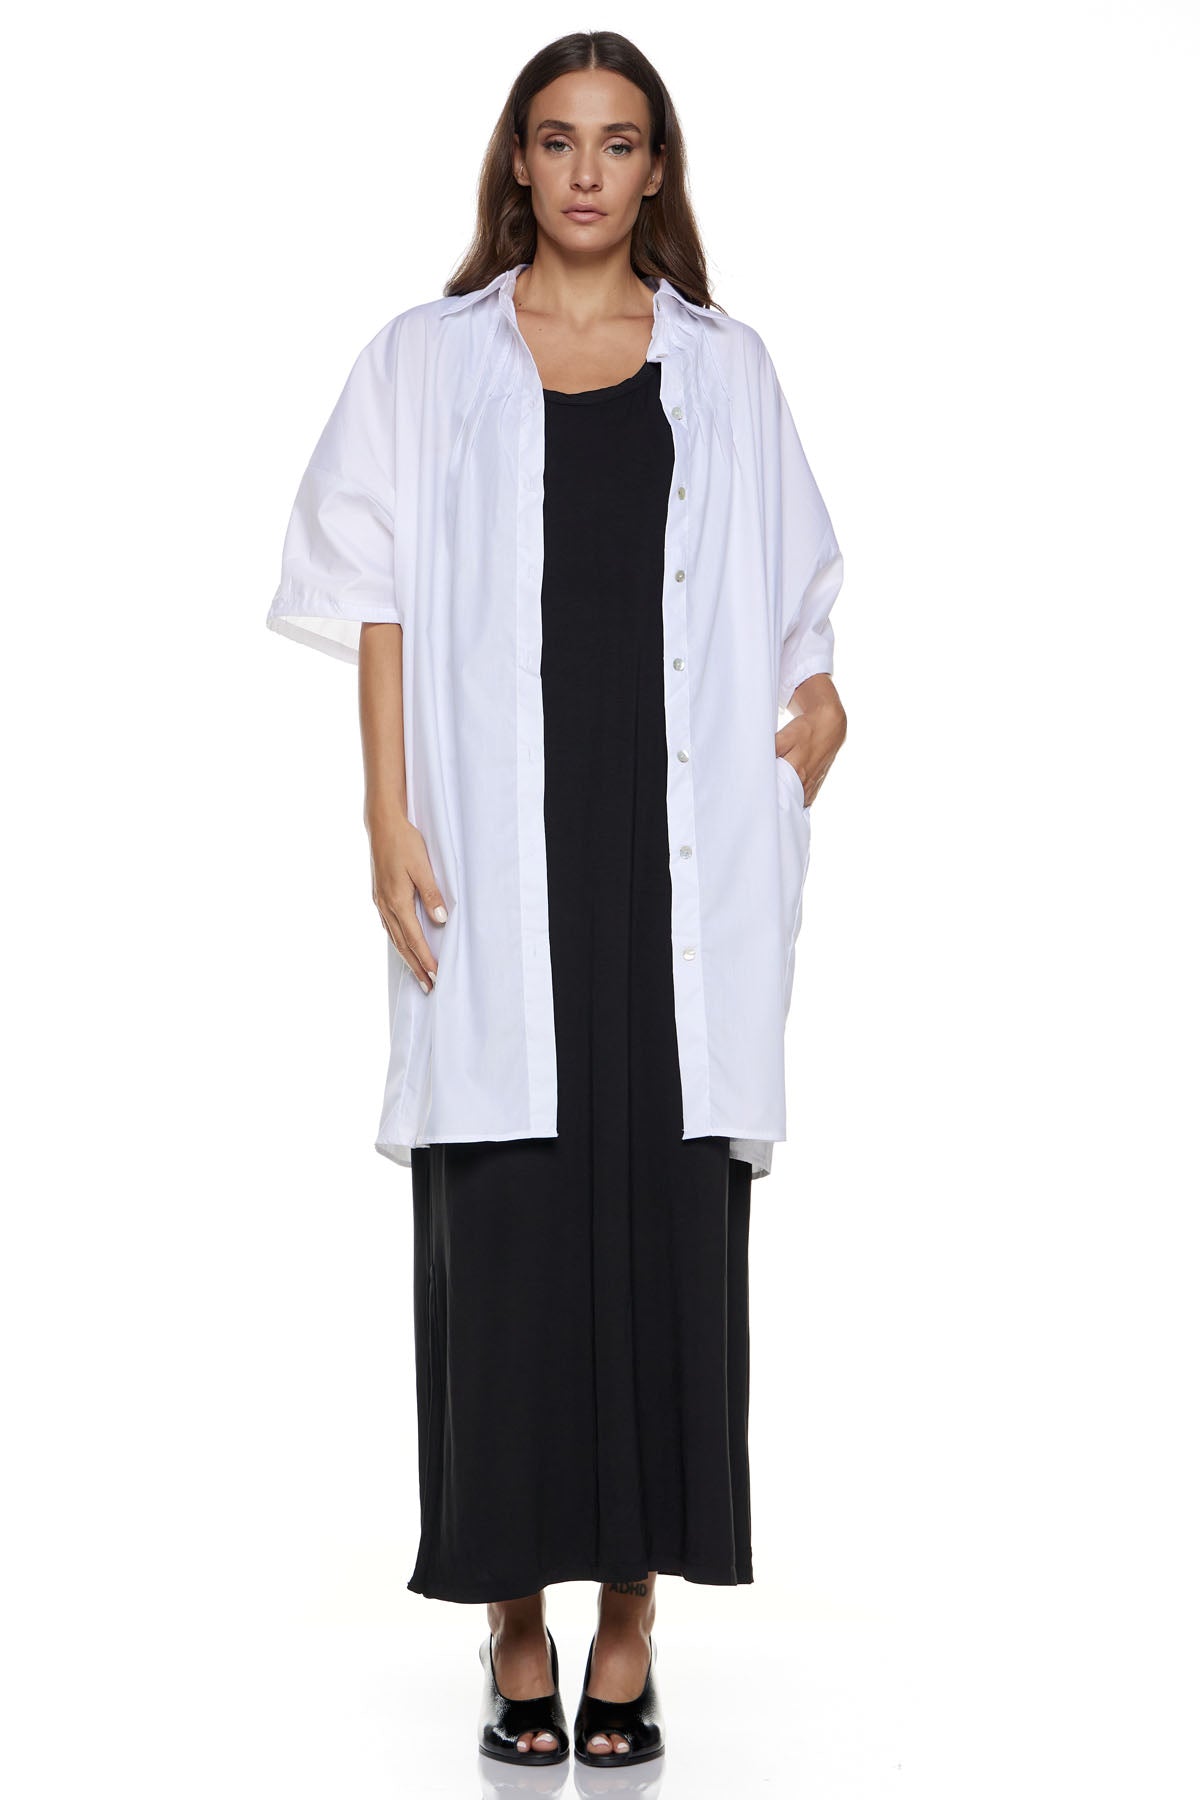 Chic & Simple Combination Dress (Basics) Shawl & Texas Shirt - Black & White